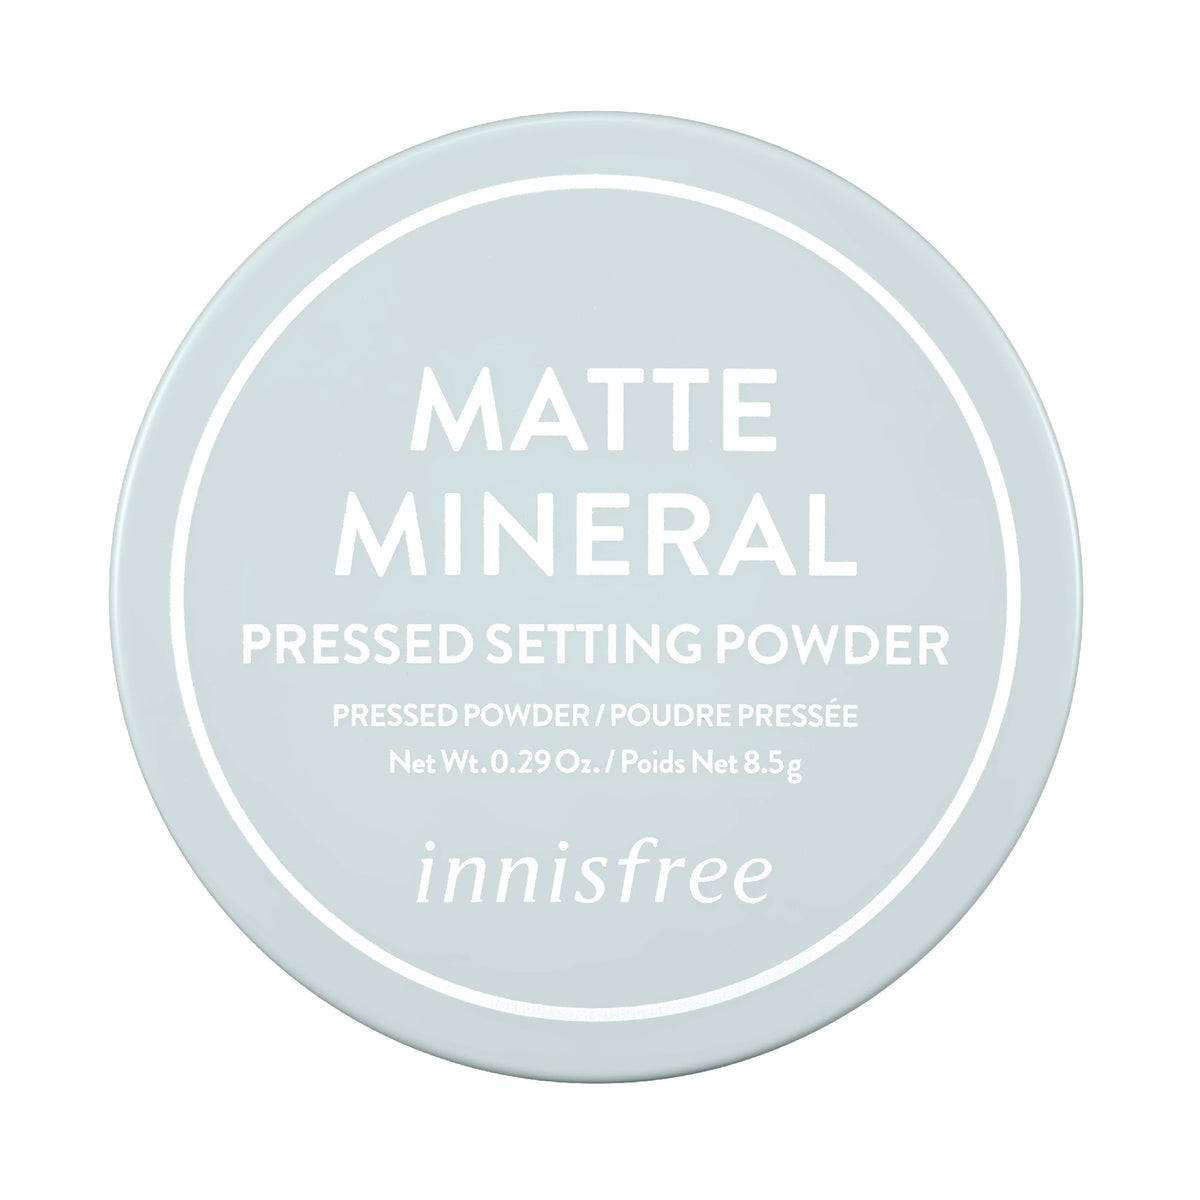 Matte Mineral Pressed Setting Powder 8.5g